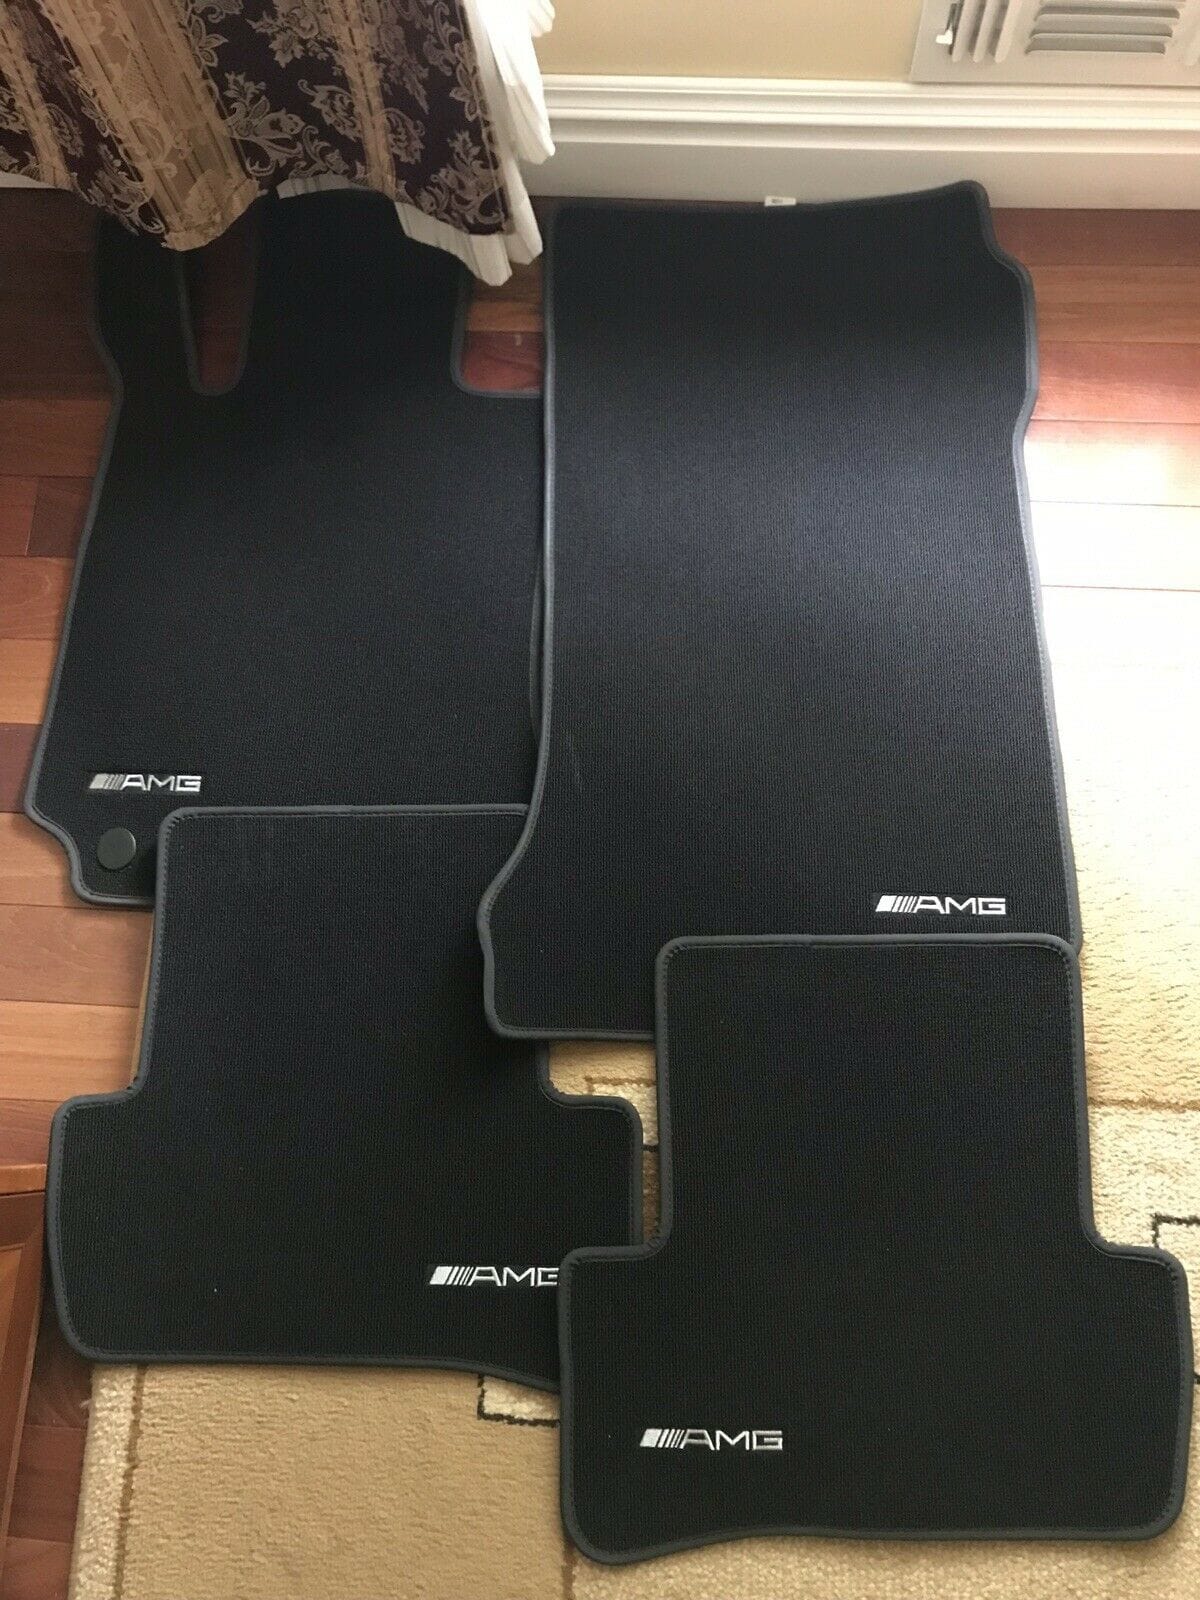 Interior/Upholstery - FS: New OEM C63 AMG carpet floor mats (prob fits other C-series) CNTL NJ/ROCKVILLE MD - New - 2008 to 2014 Mercedes-Benz C63 AMG - Somerville, NJ 08876, United States